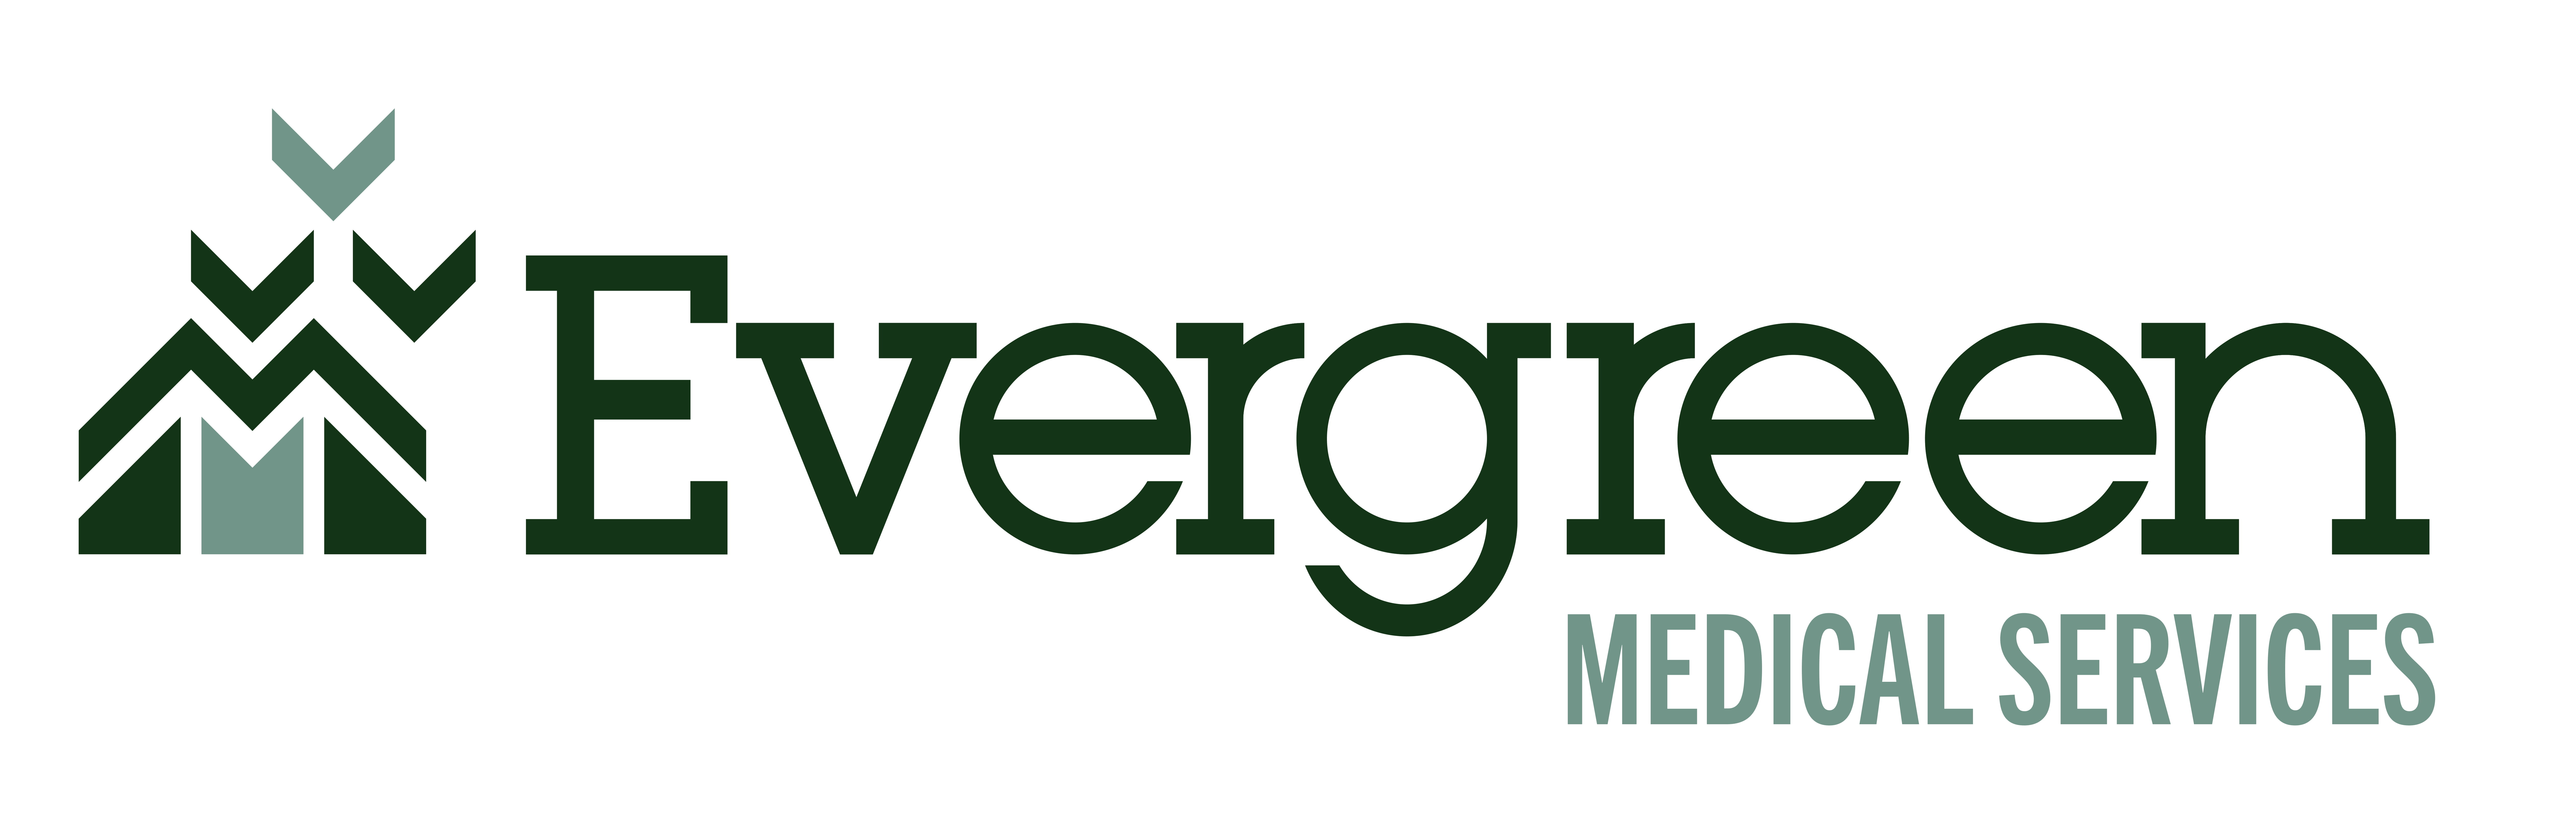 Evergreen Medical Services Logo